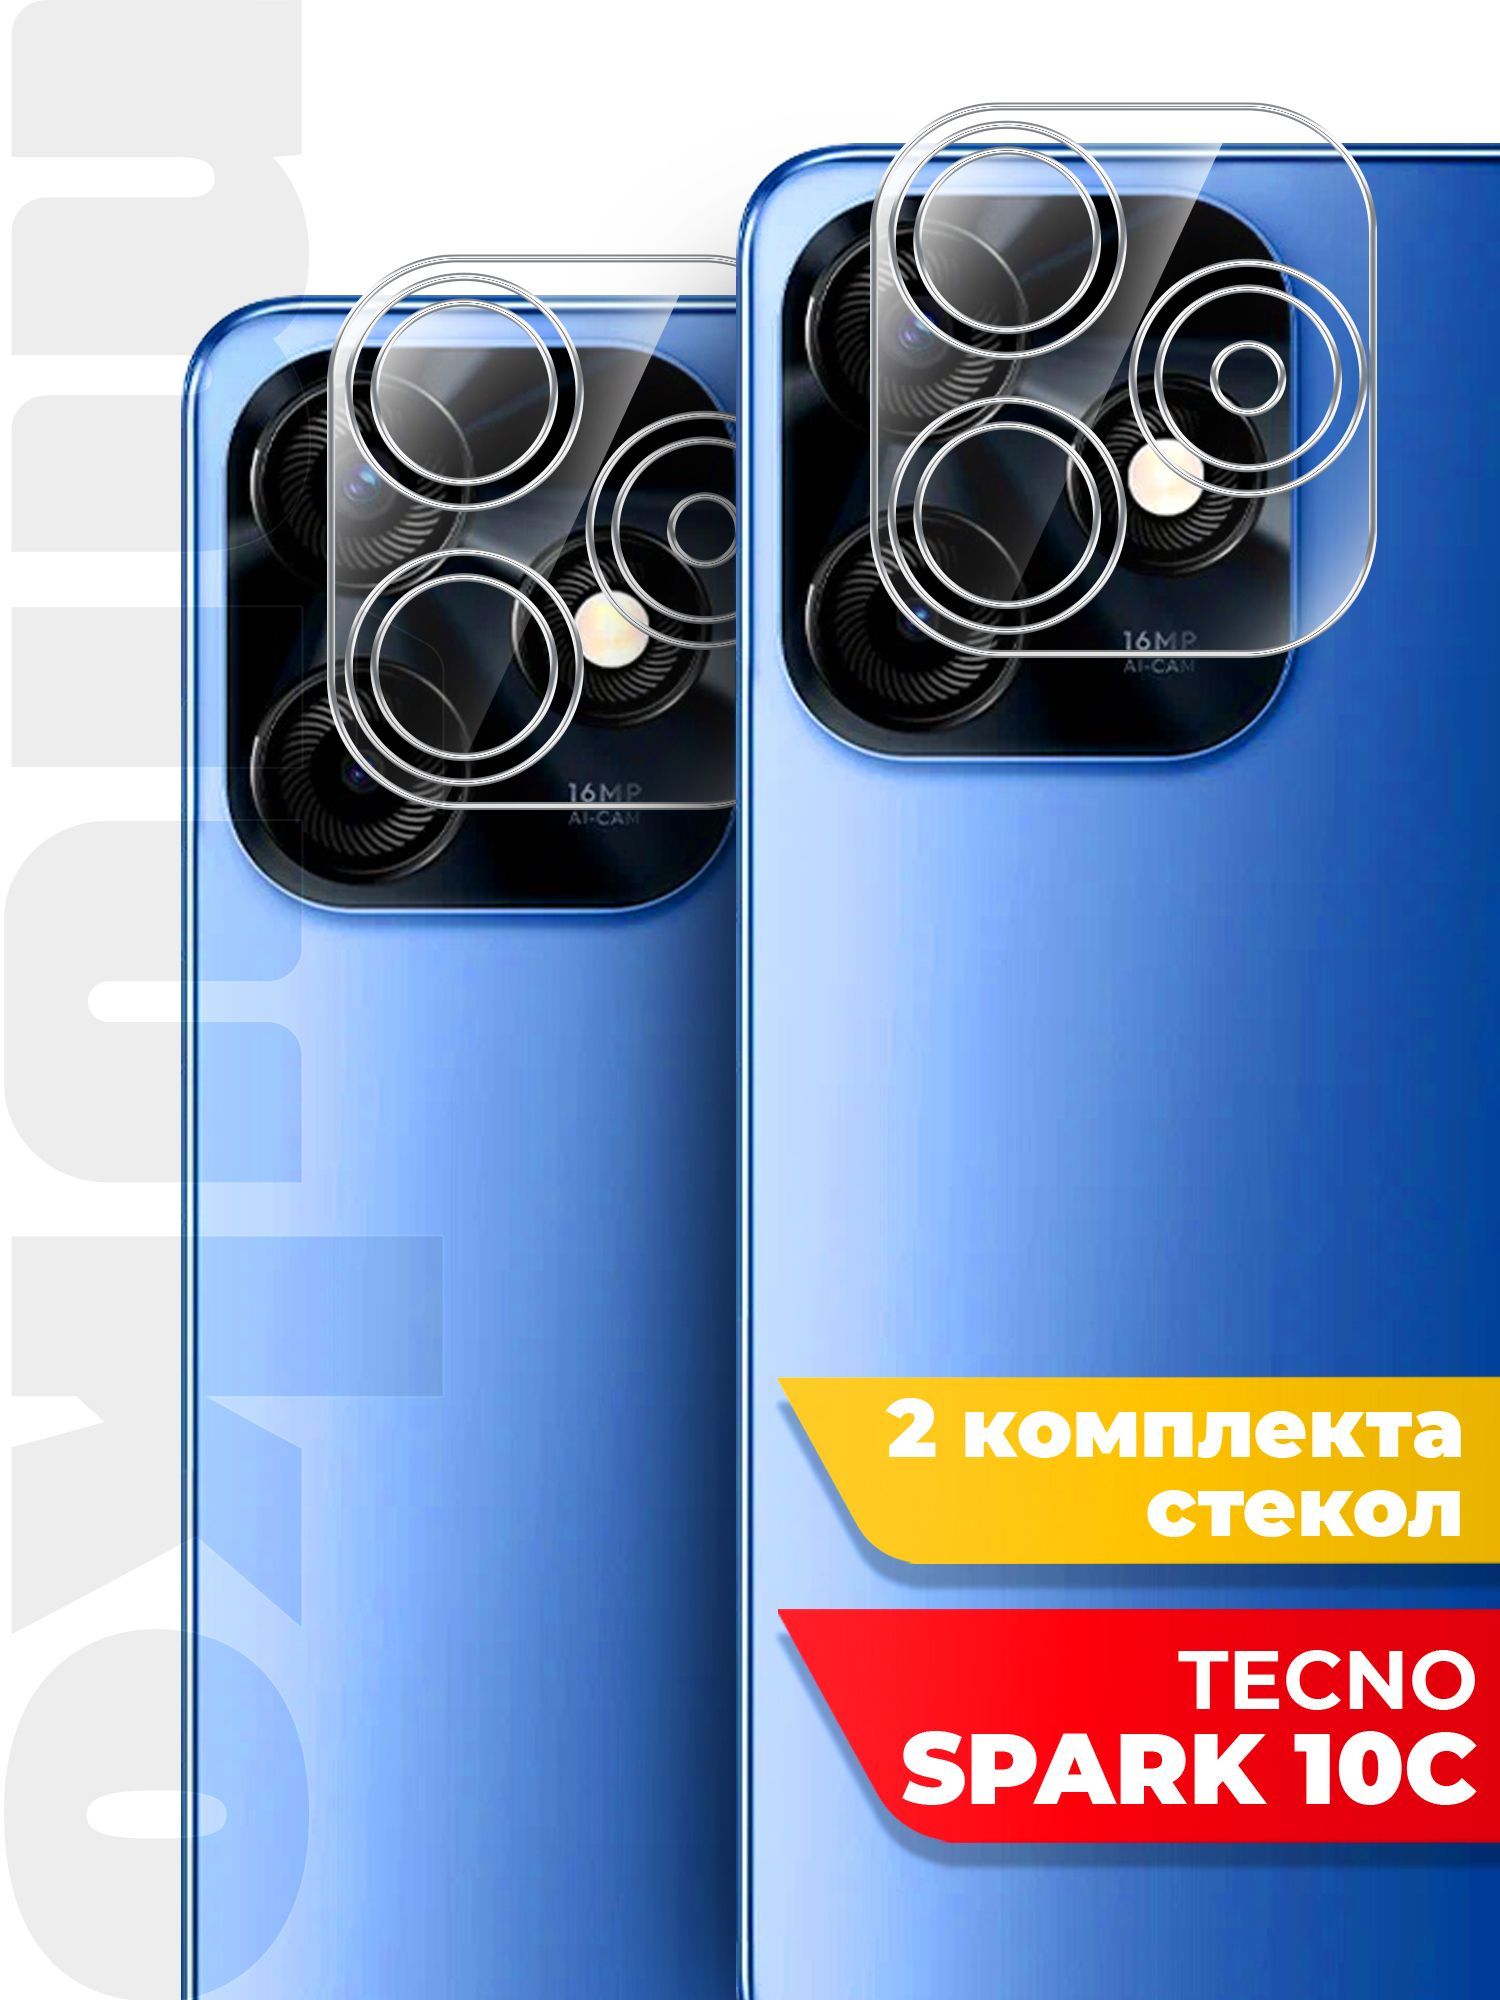 Tecno spark 10 экран. Techno Spark 10. Techno Spark 10c. Телефон Techno Spark 10c. Techno Spark 10c характеристики.